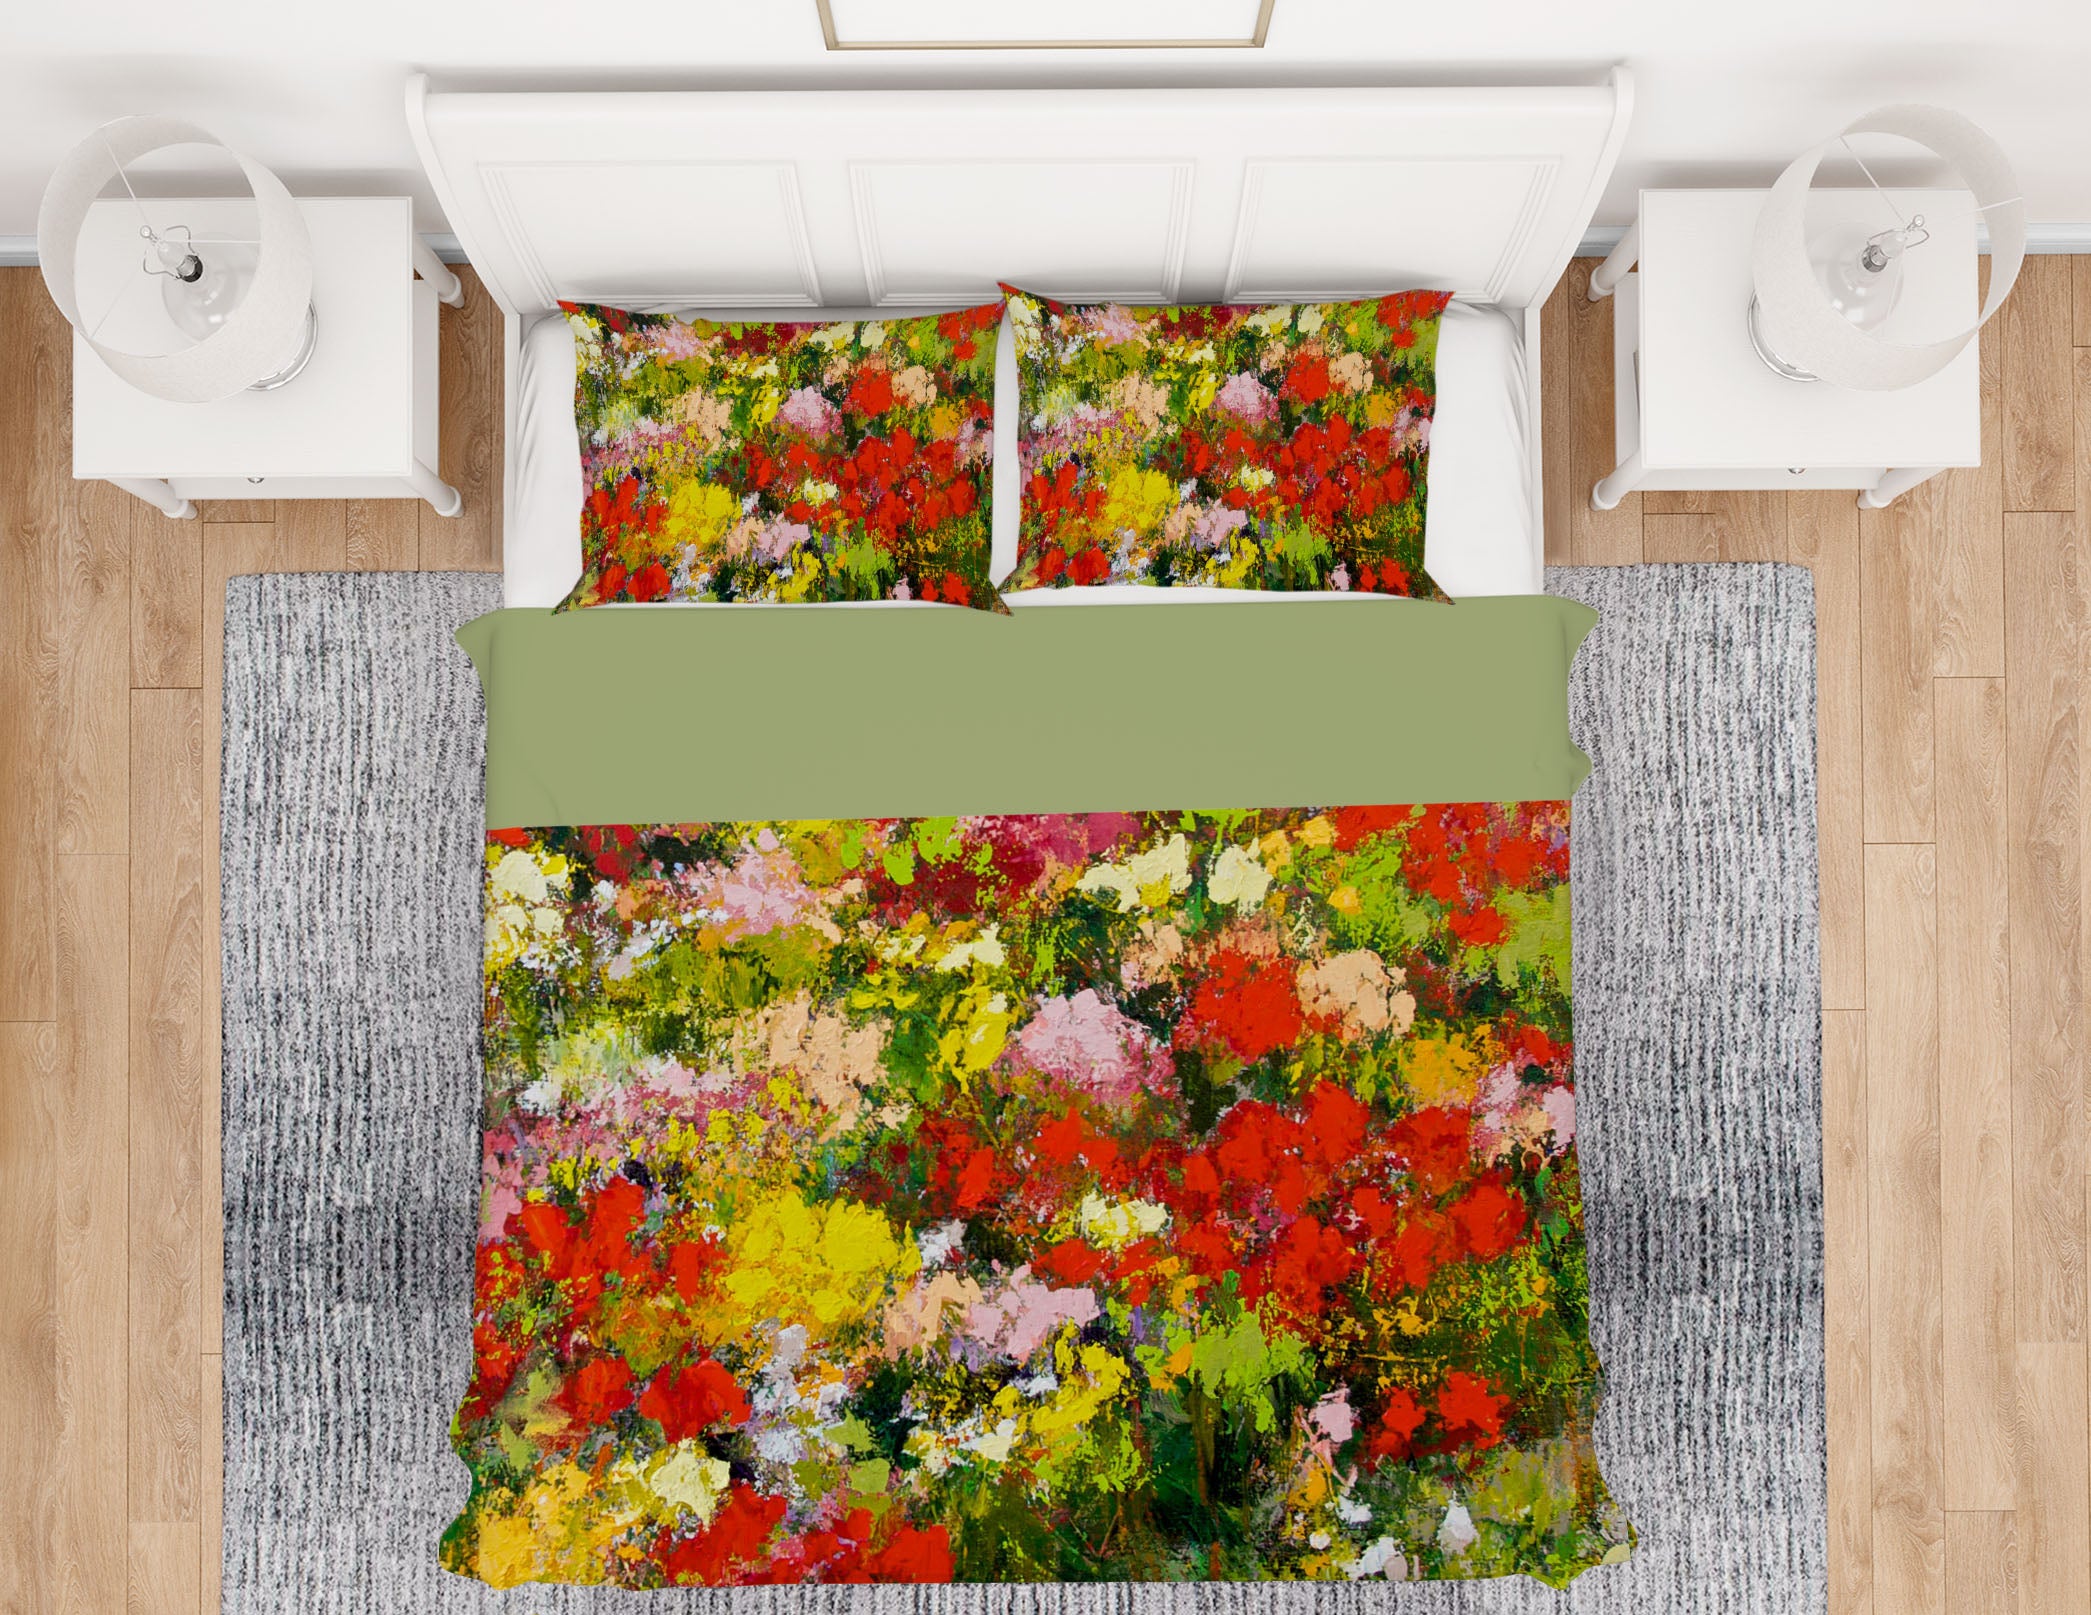 3D Colored Flowers 112 Allan P. Friedlander Bedding Bed Pillowcases Quilt